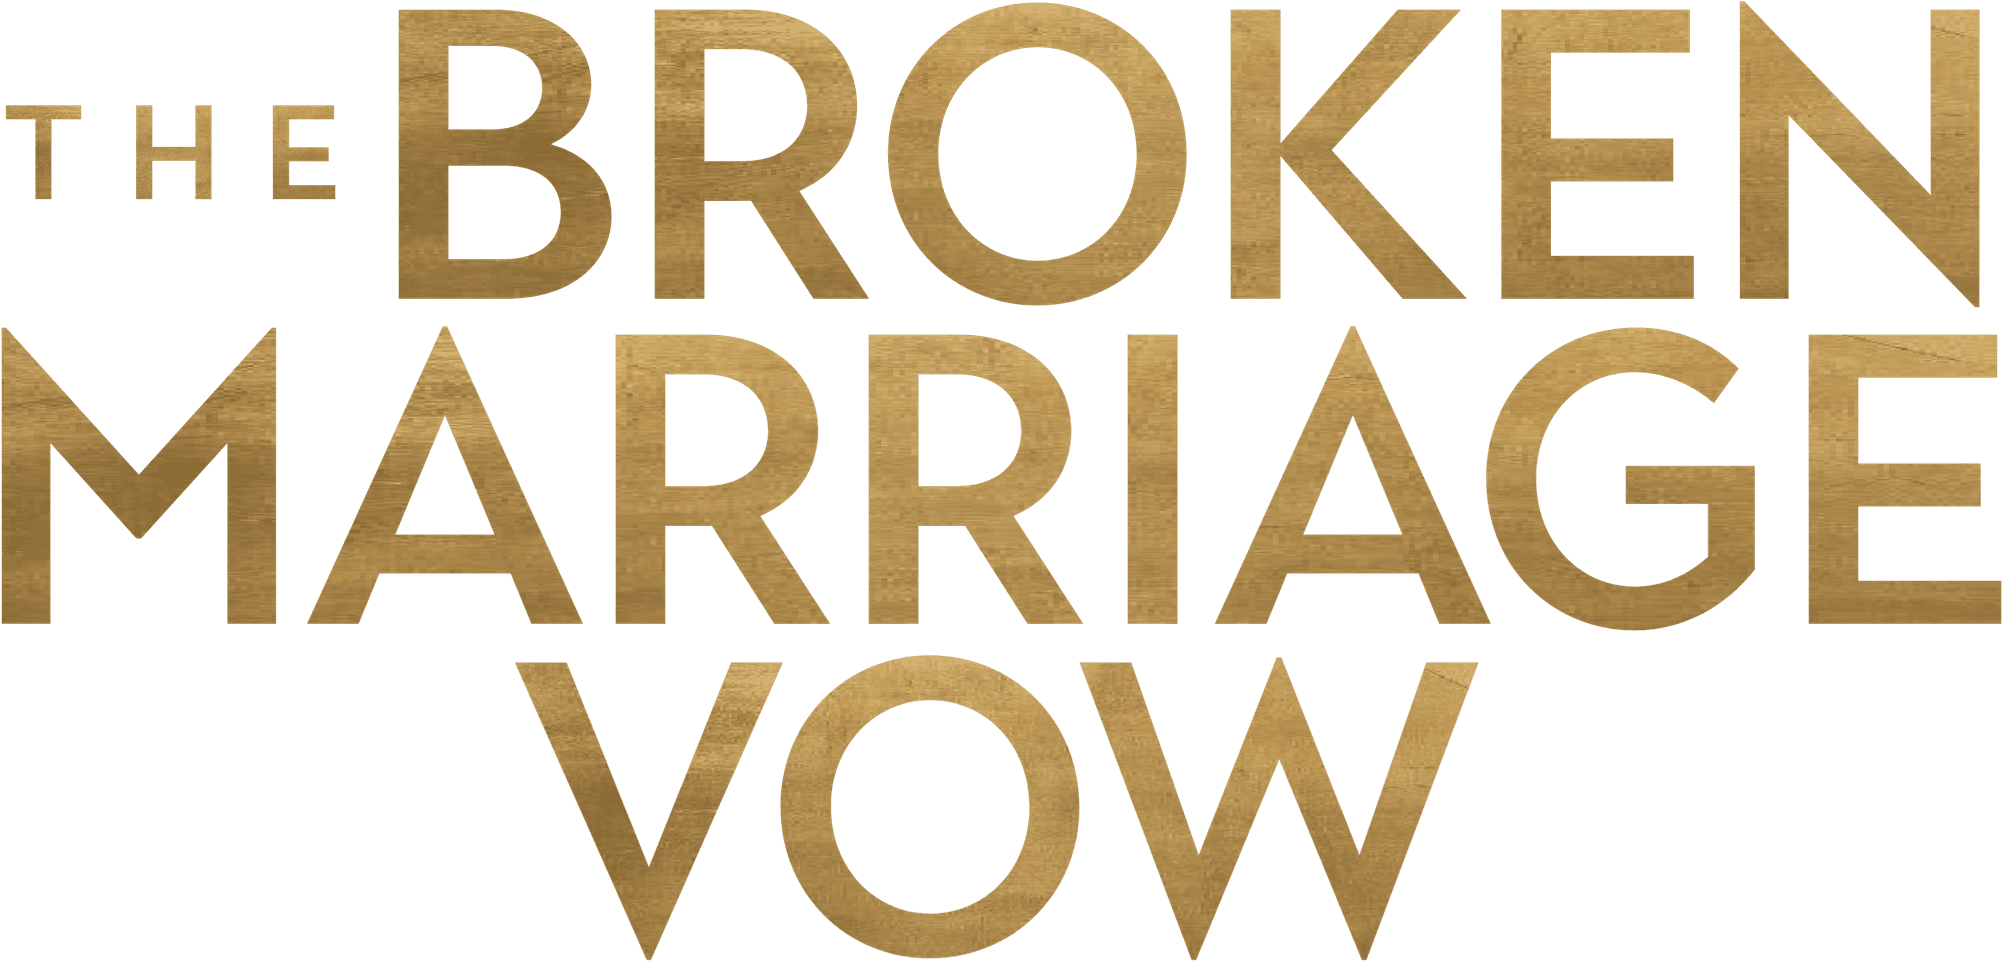 The Broken Marriage Vow logo